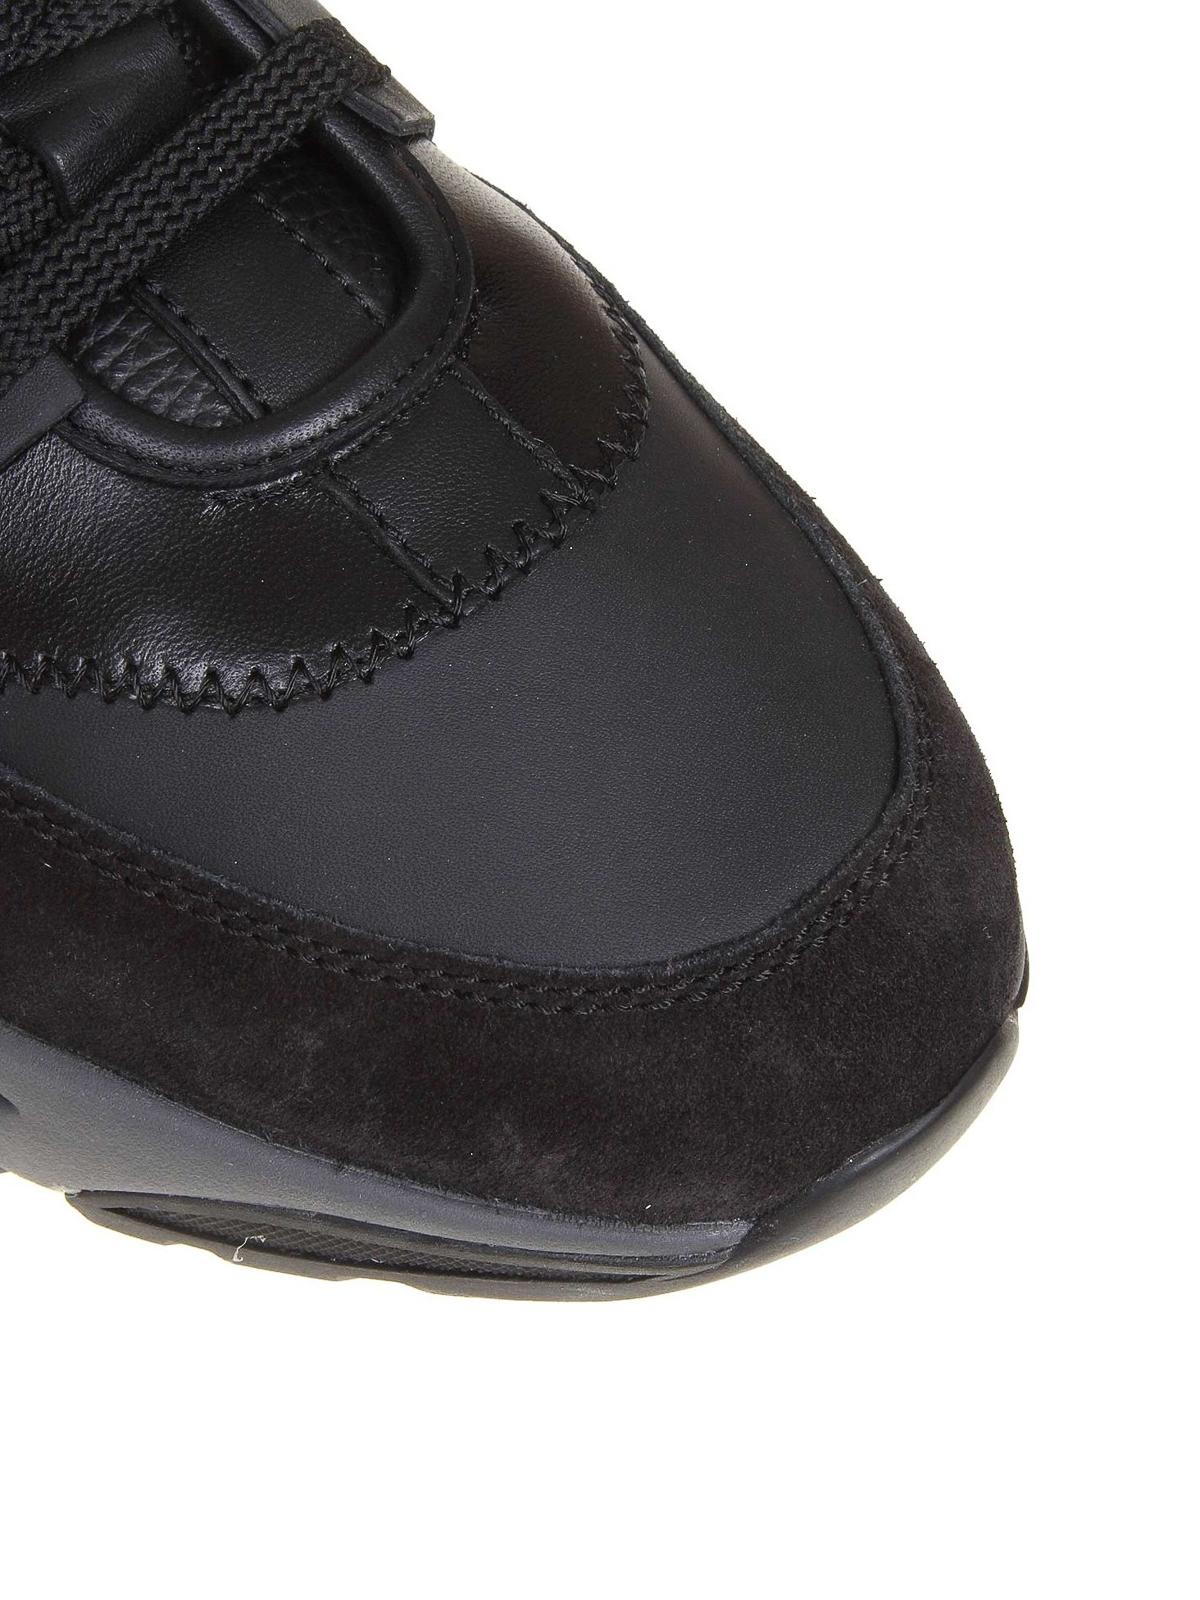 santoni shoes black friday